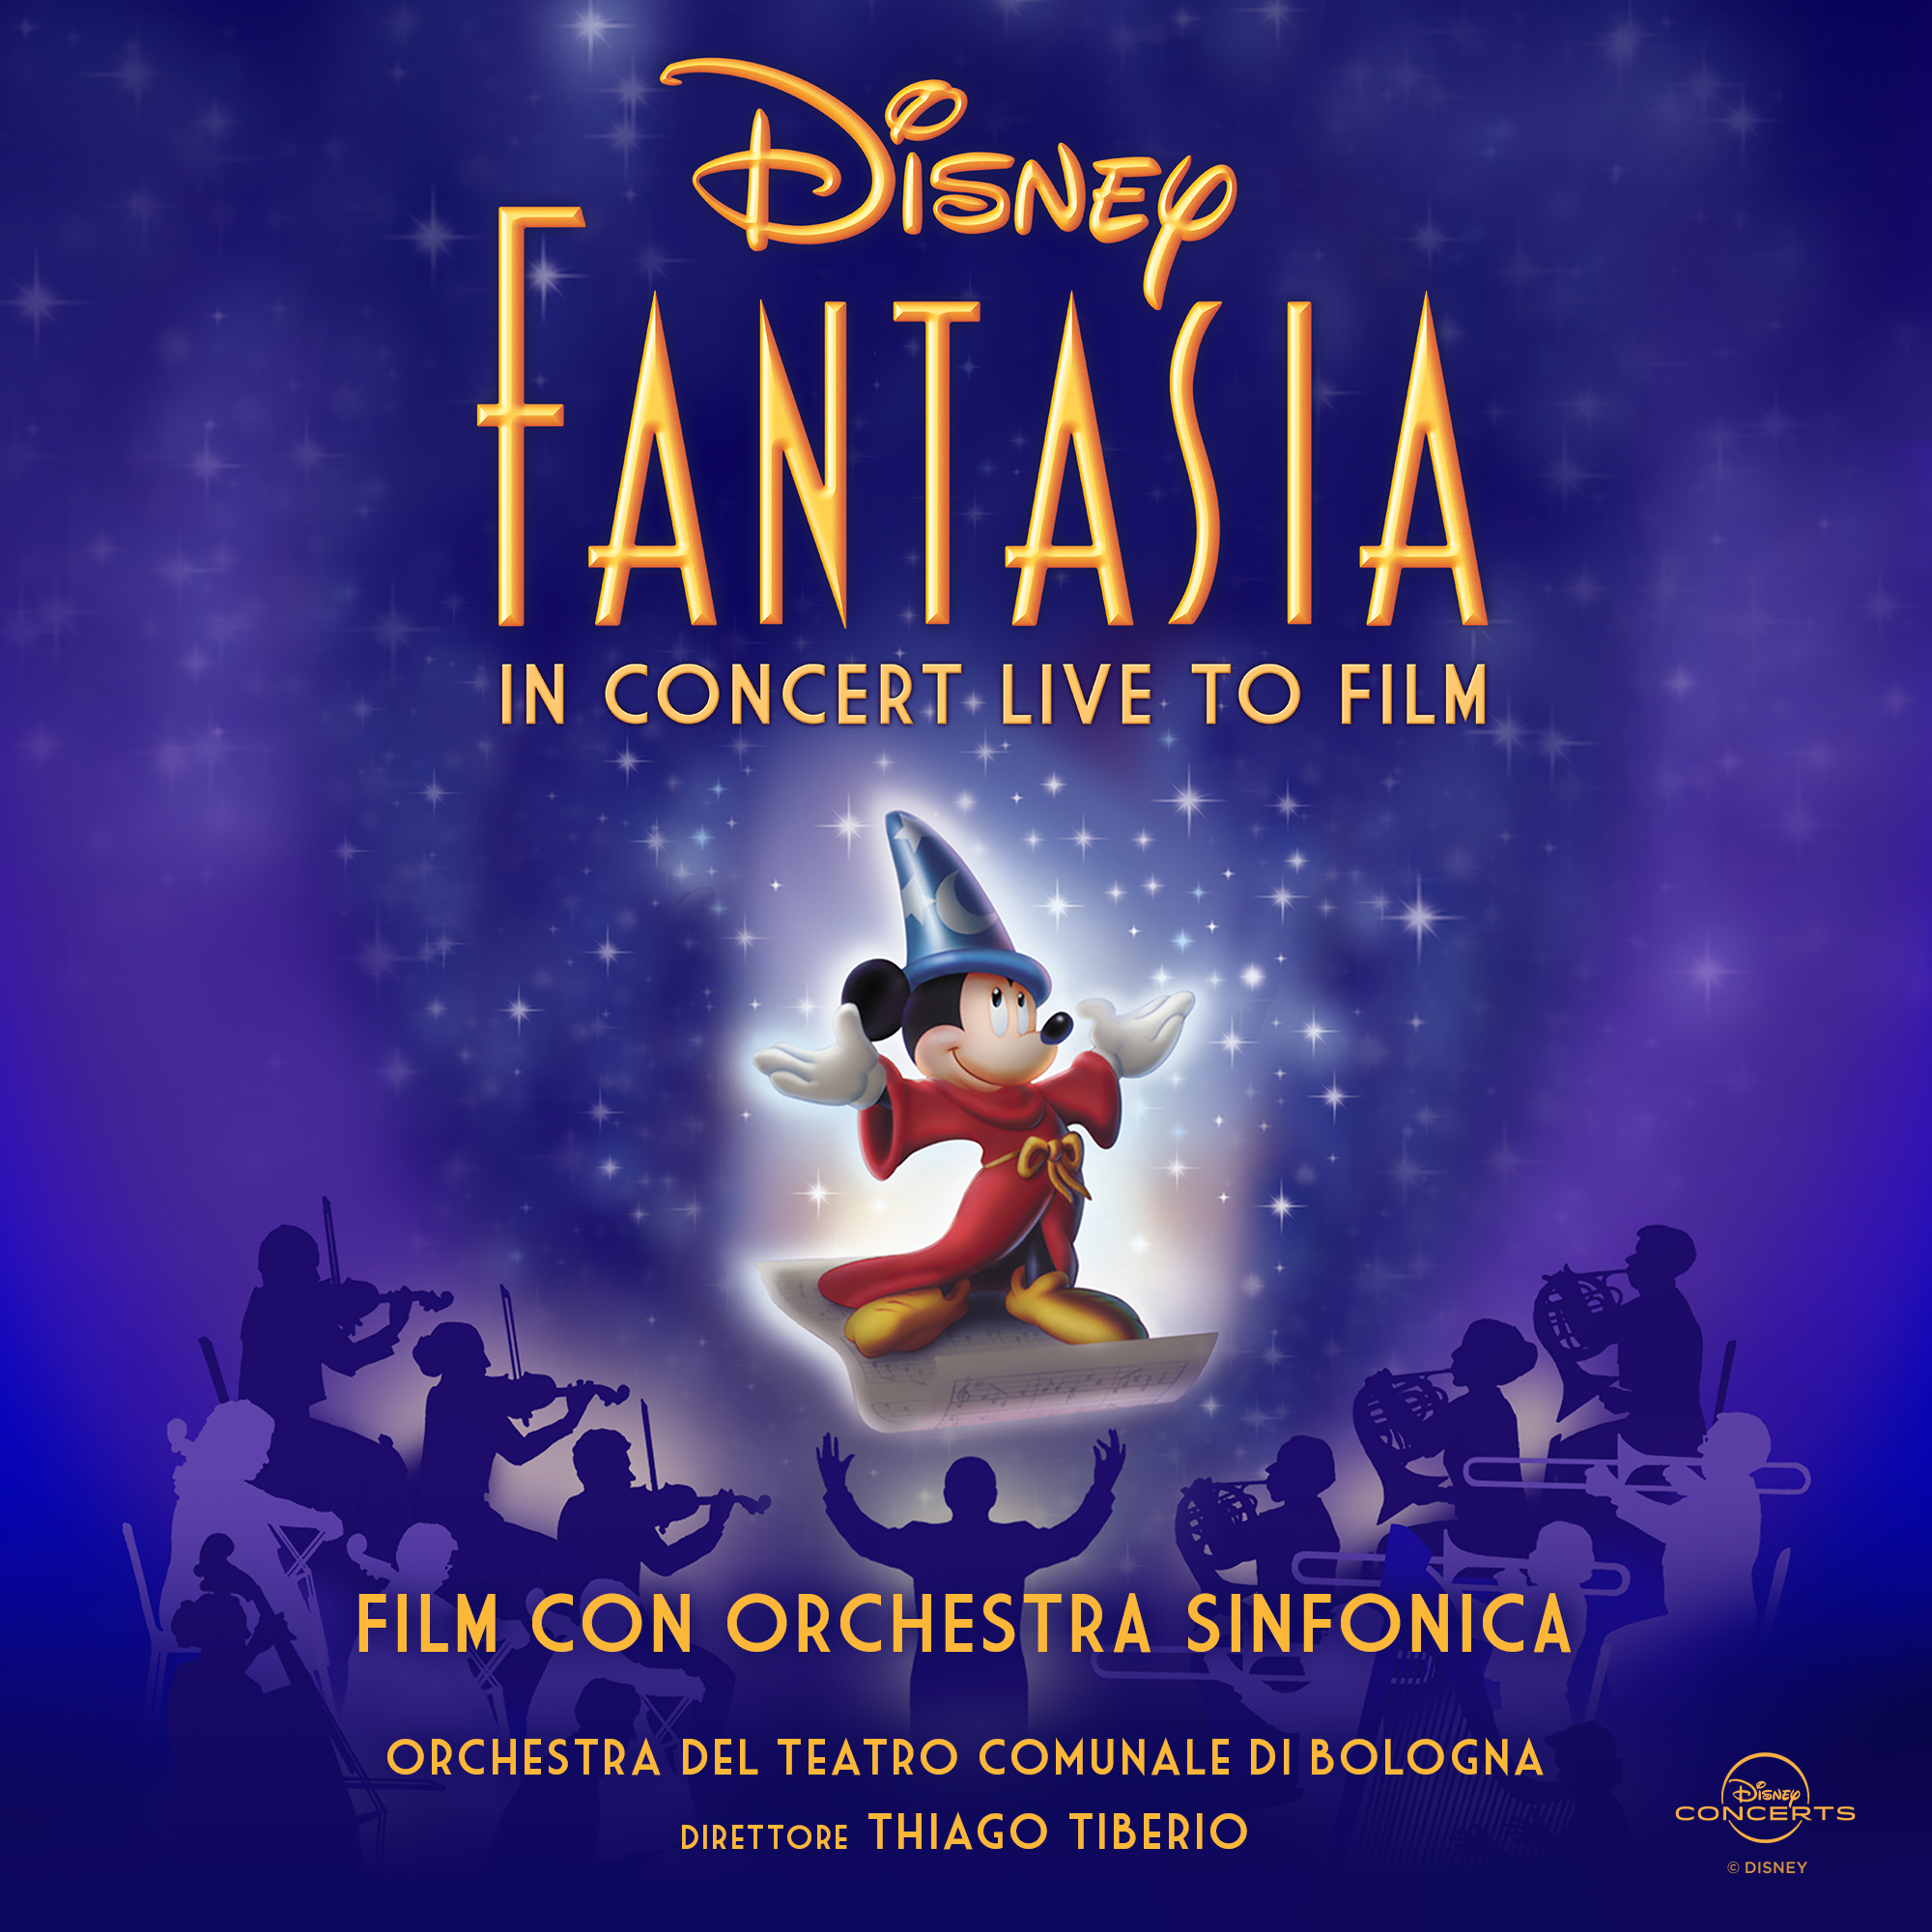 Fantasia in concert - Disney Concert